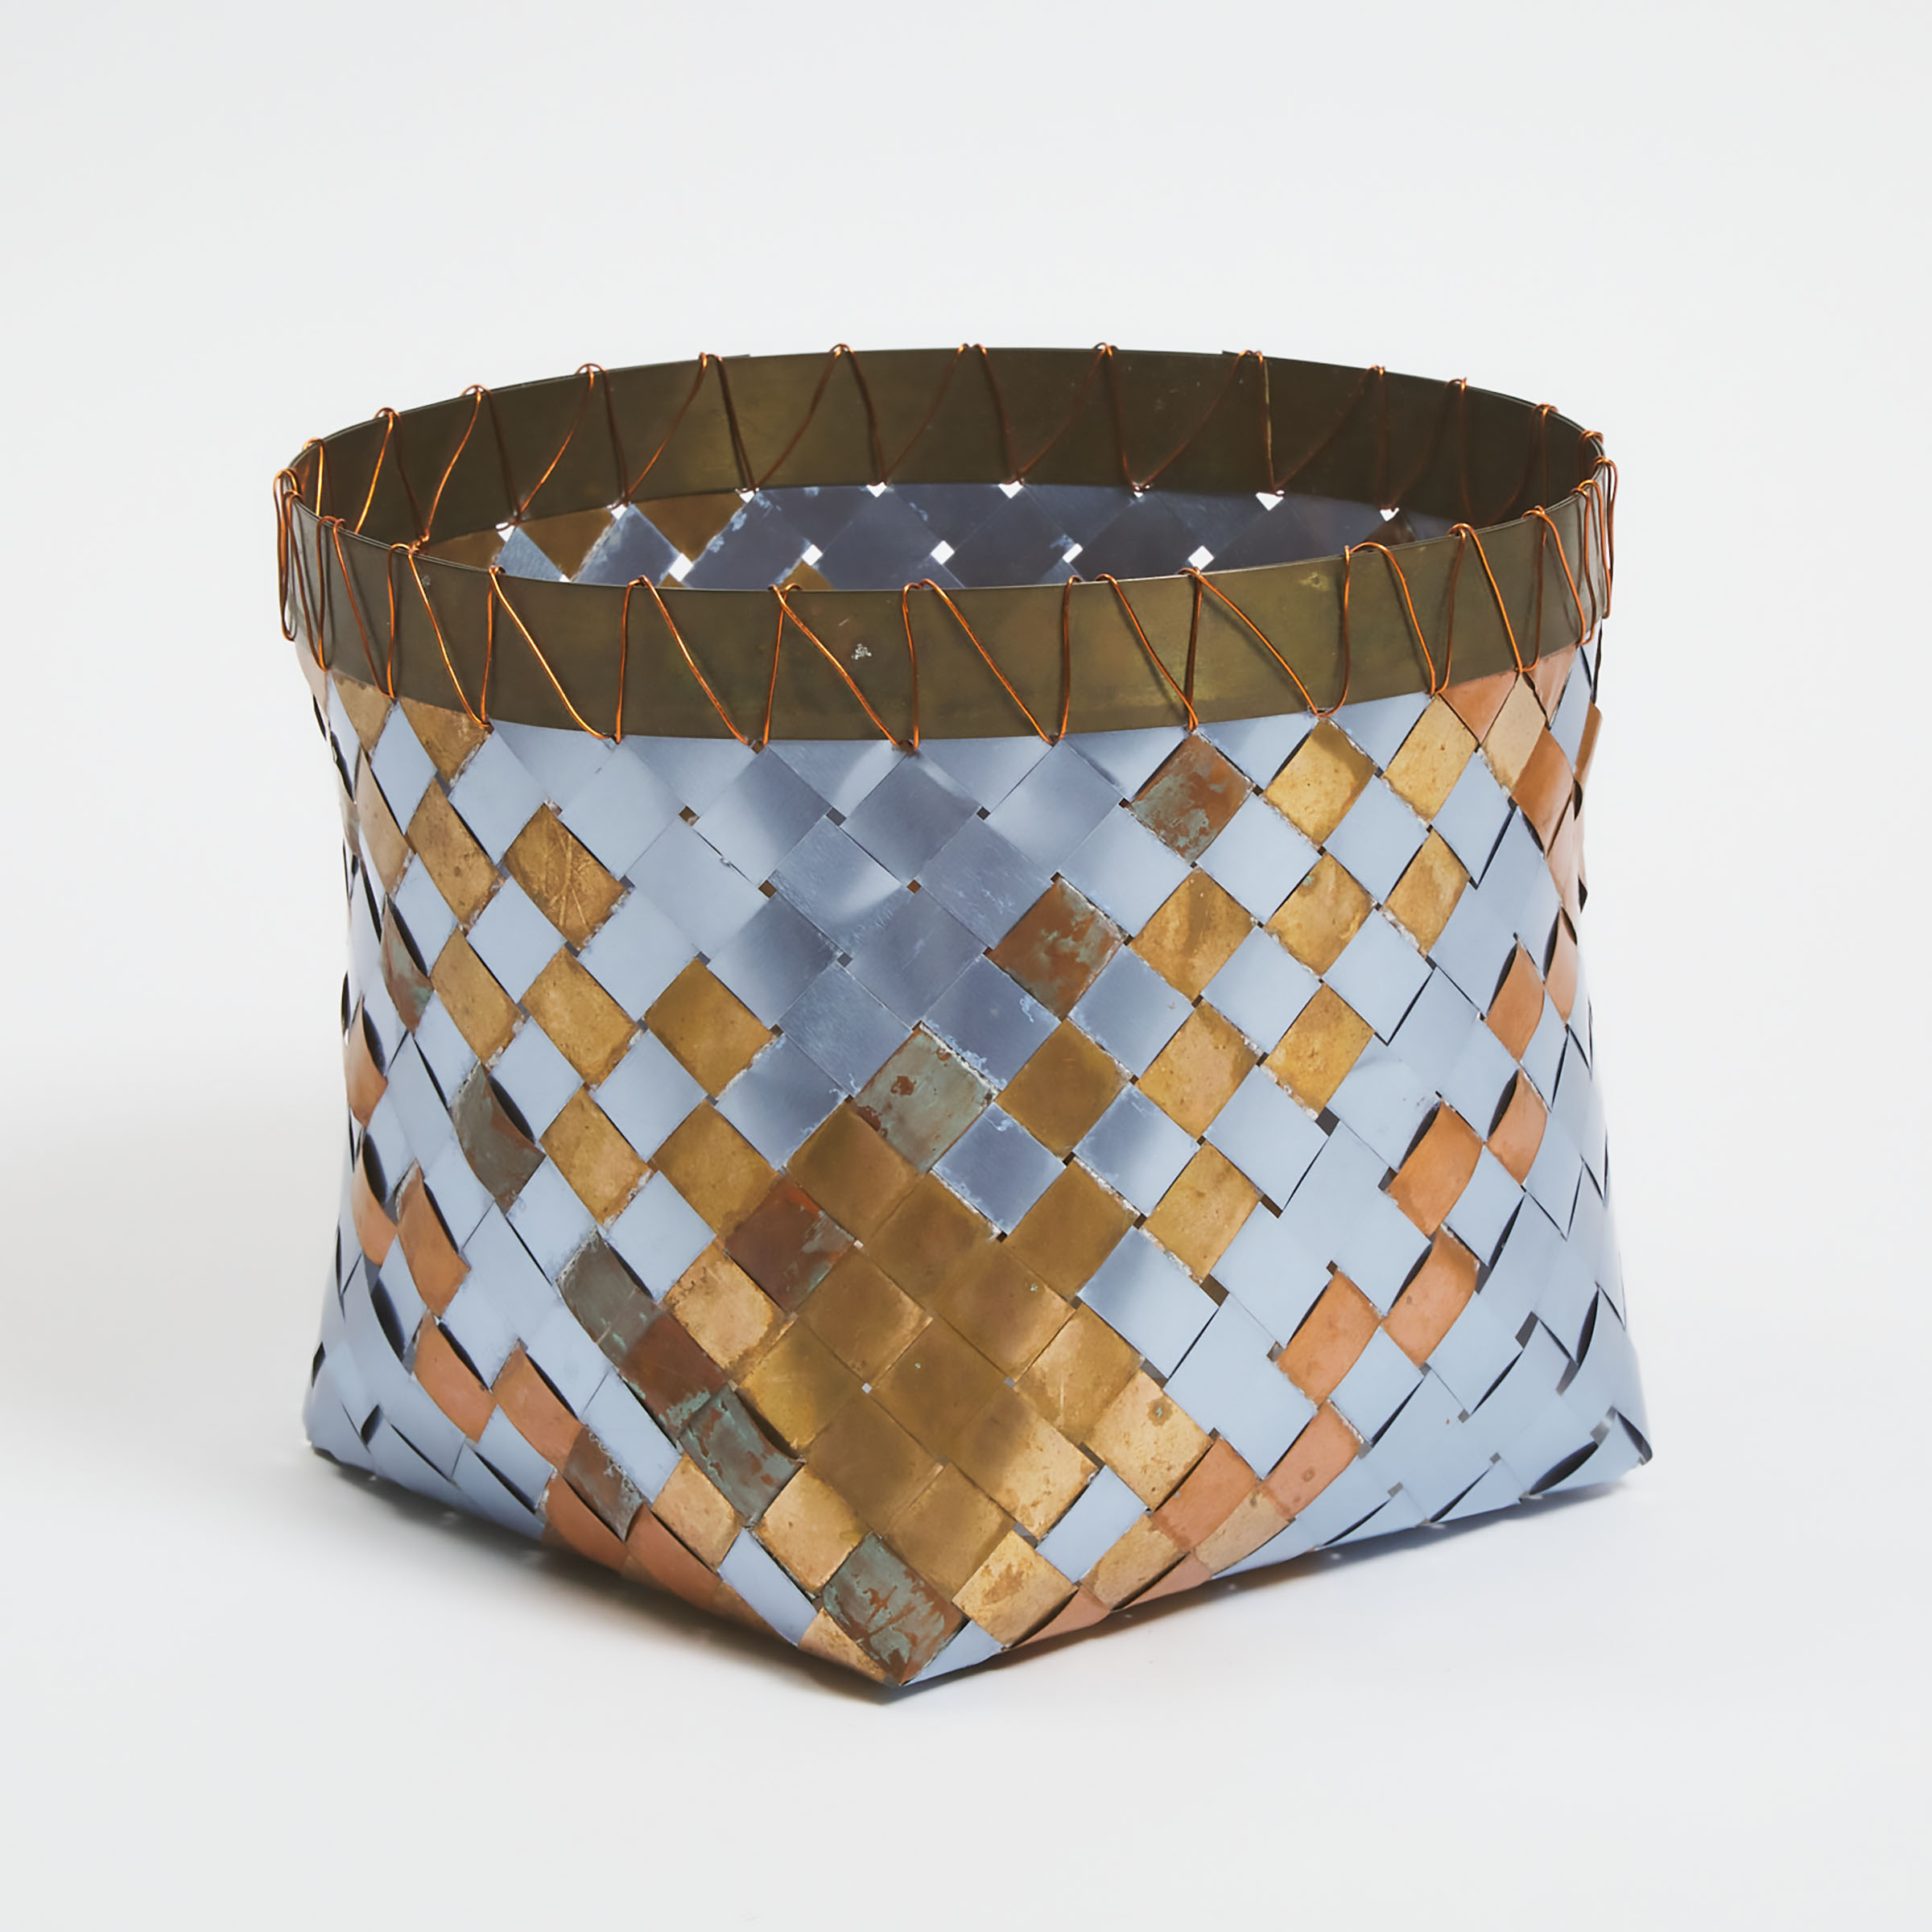 Melinda Mayhall (Canadian, 1939-2020) Decorative Woven Copper and Tin Basket, c.1990